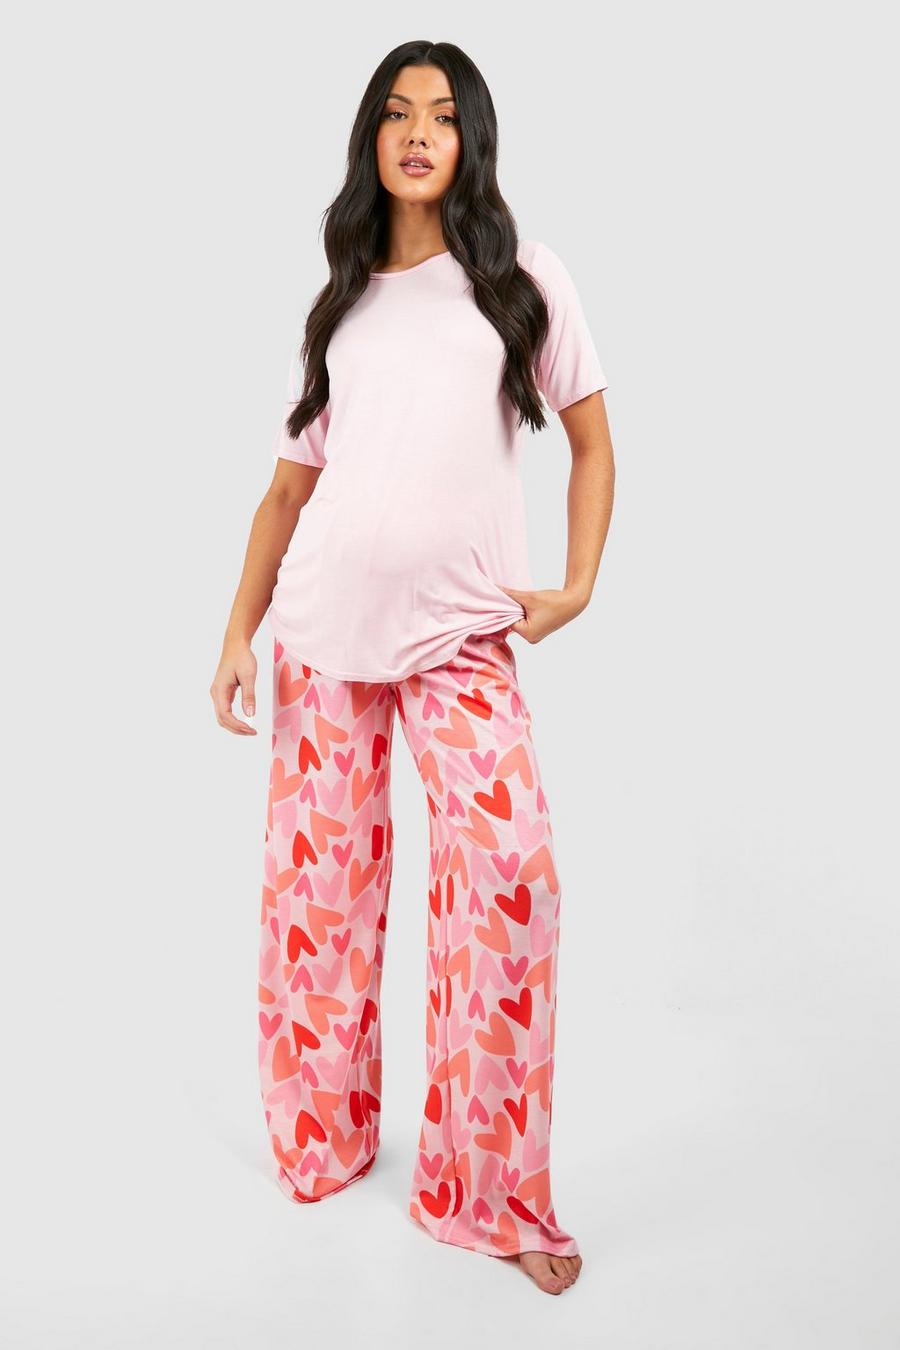 Pink Maternity Heart Print Pants Pajama Set